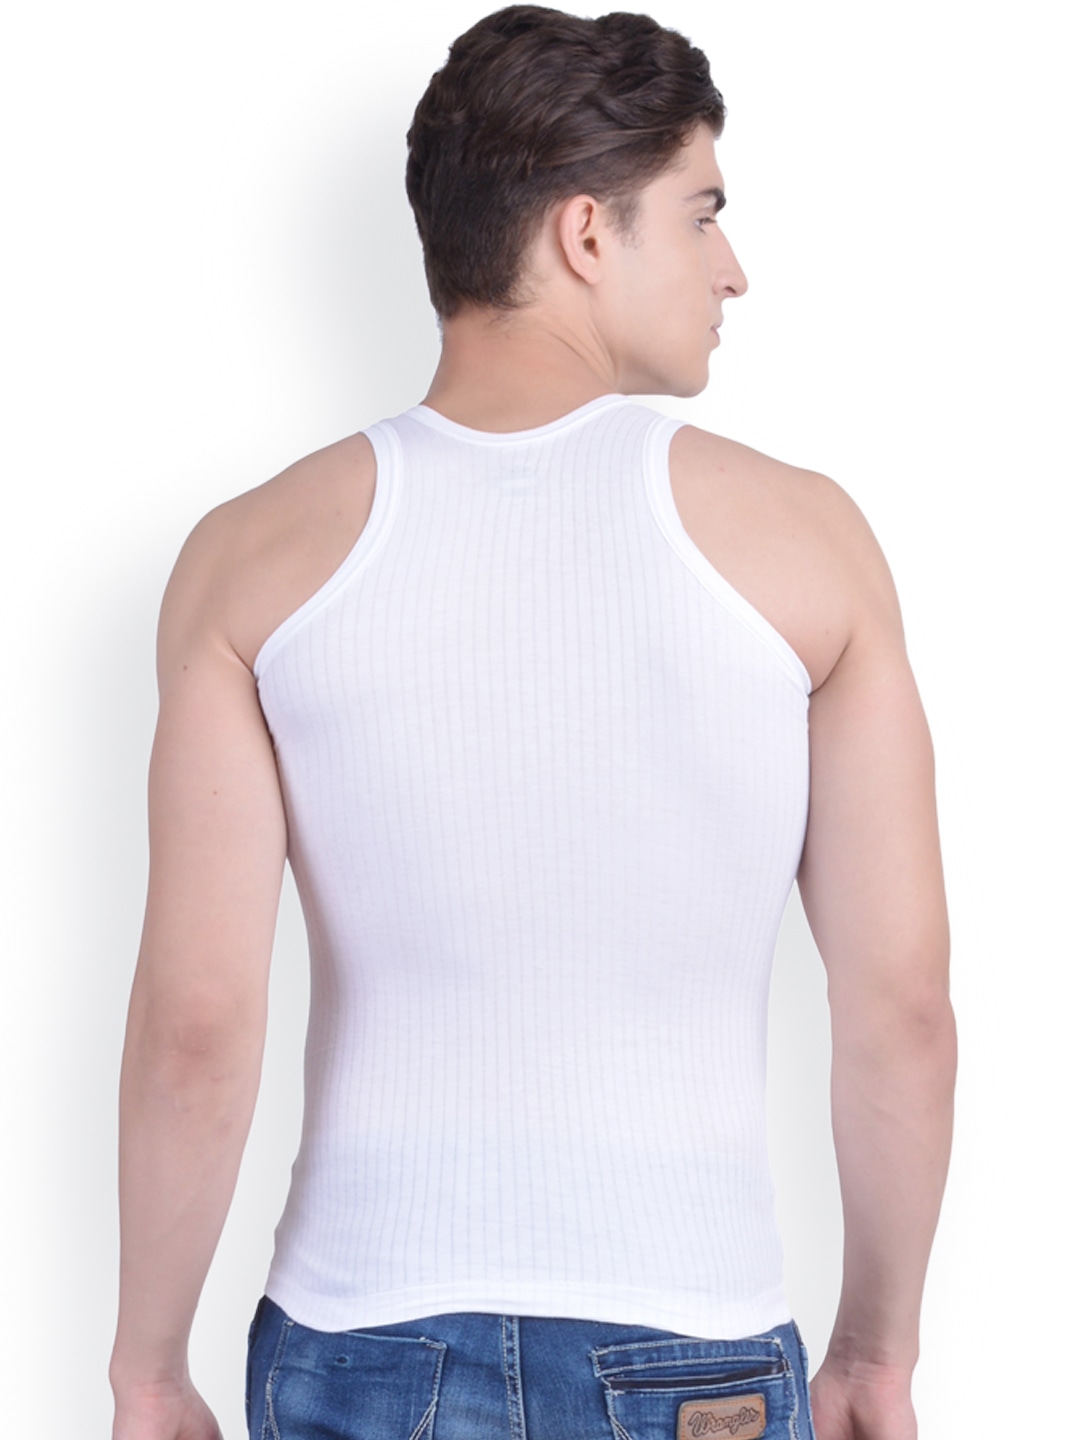 Clothing Innerwear Vests | Dollar Bigboss Pack of 3 White Innerwear Vests MDVE-03-PO3 - CU26954